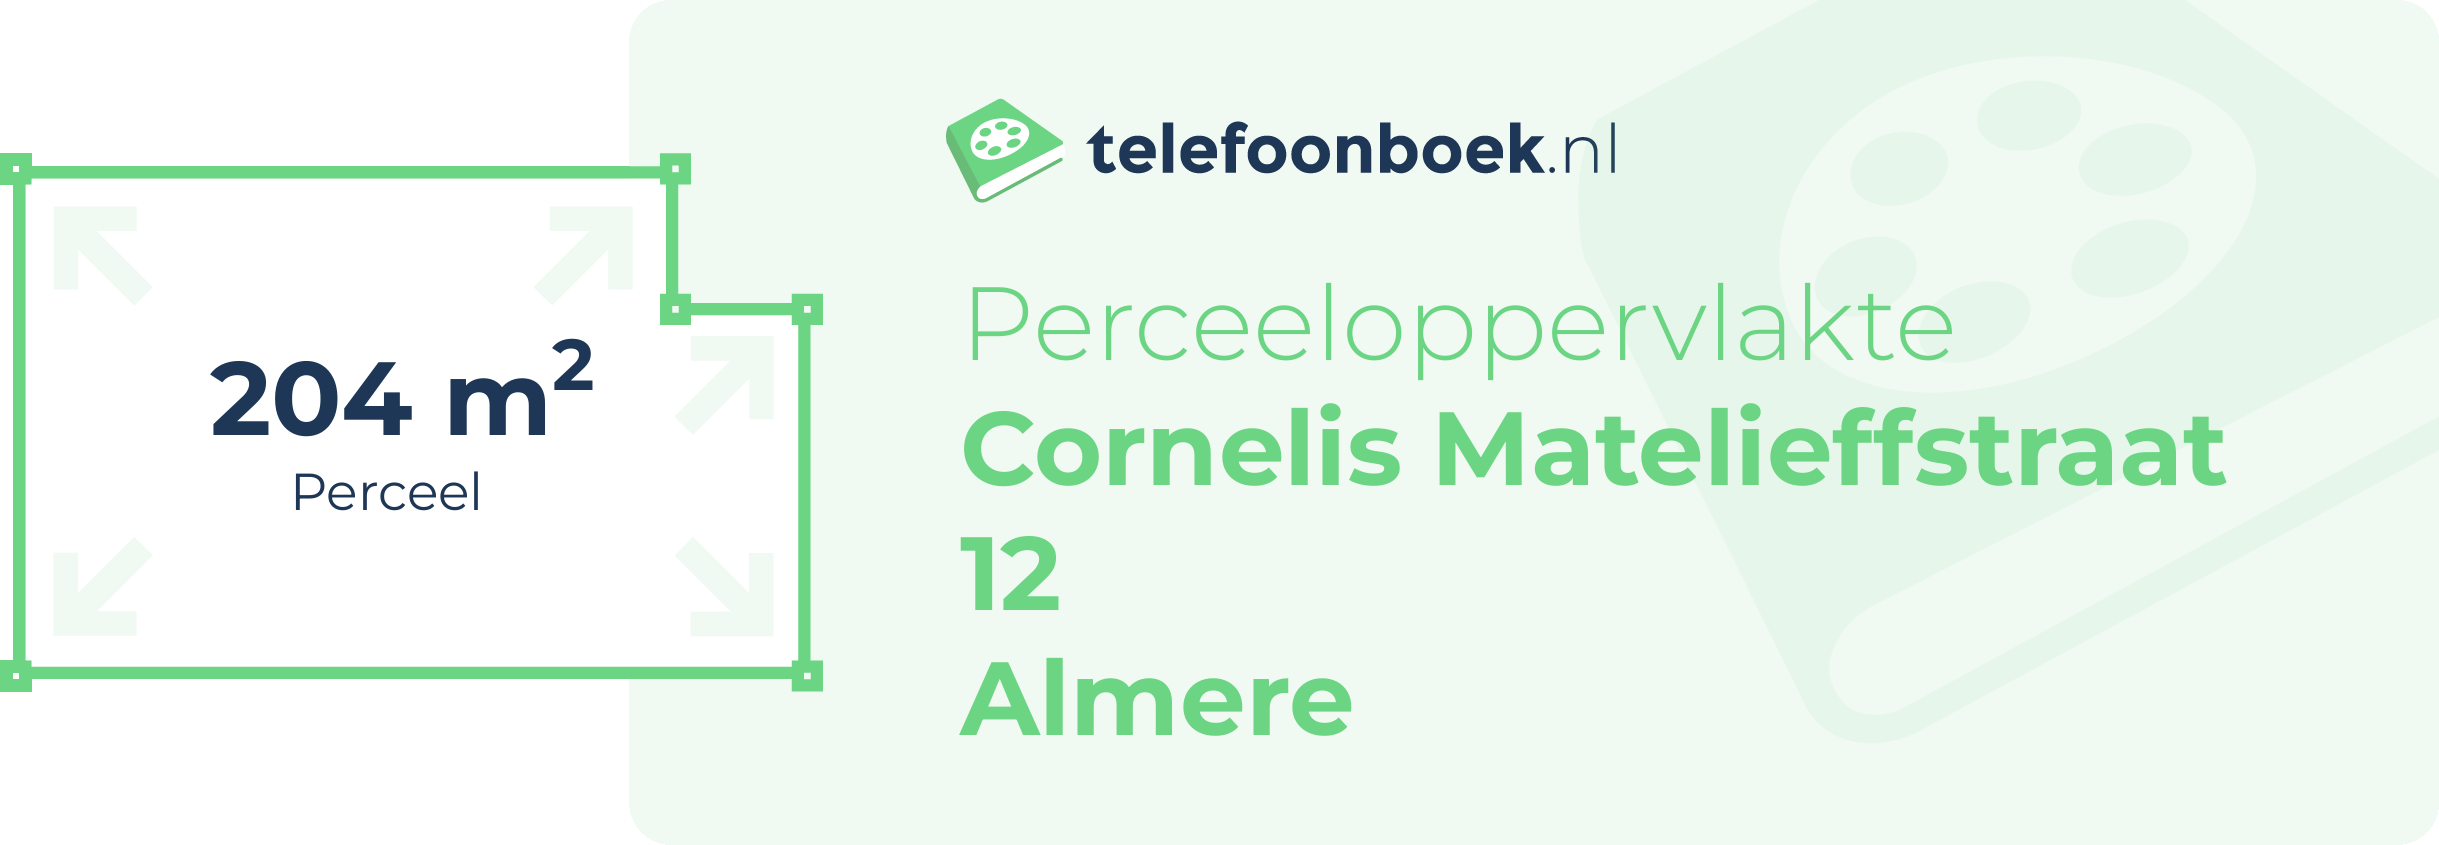 Perceeloppervlakte Cornelis Matelieffstraat 12 Almere